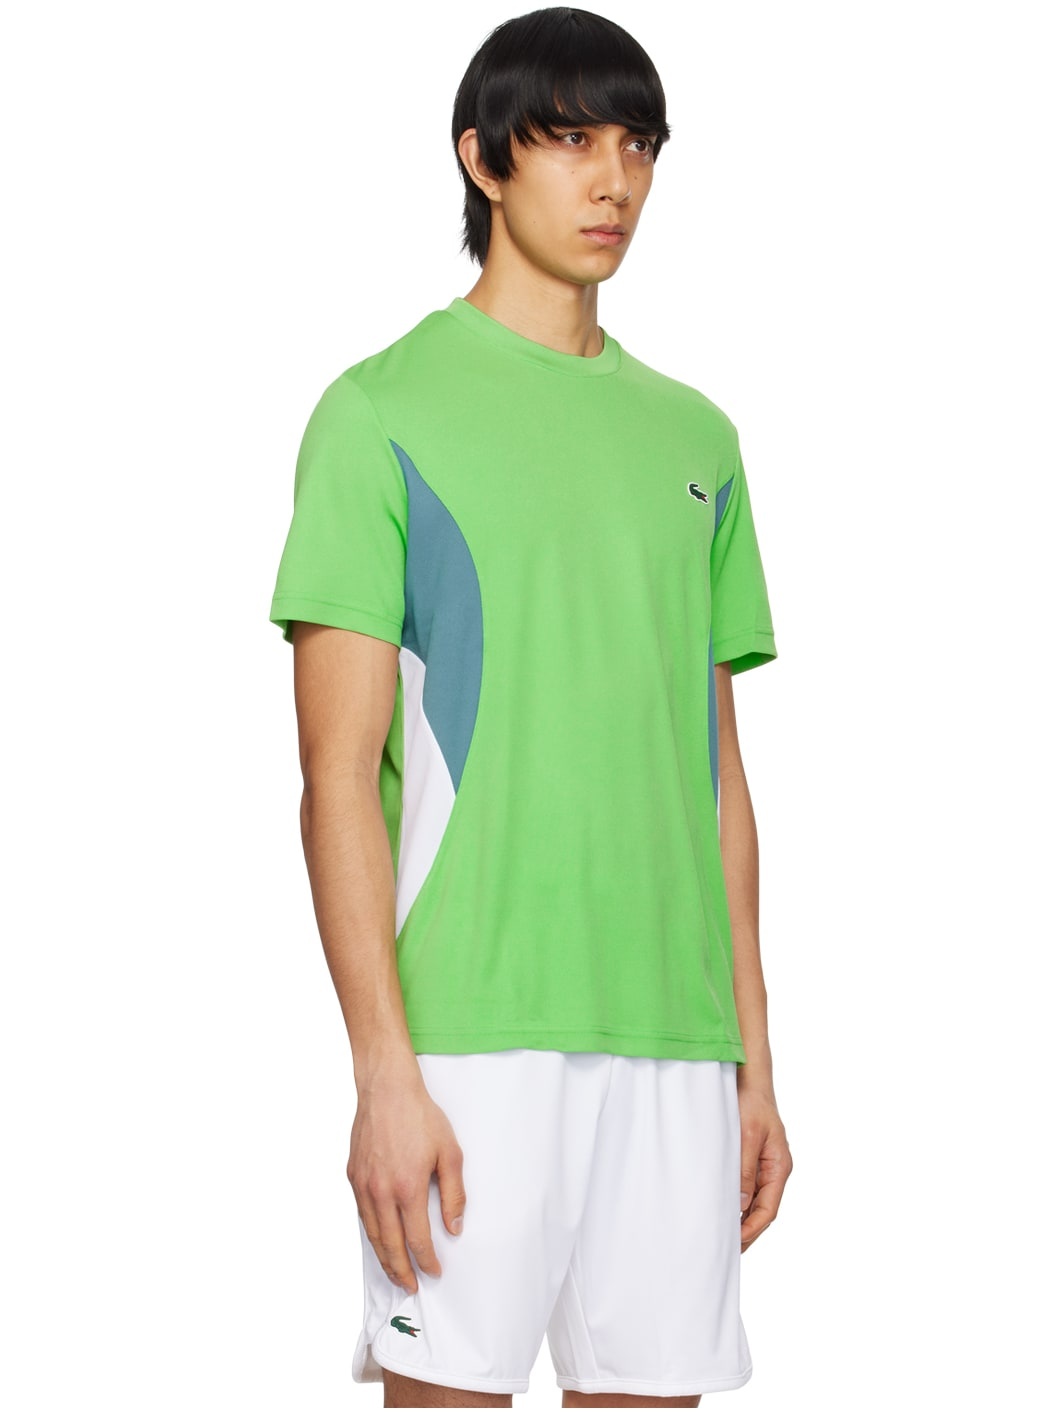 Green Novak Djokovic Edition T-Shirt - 2